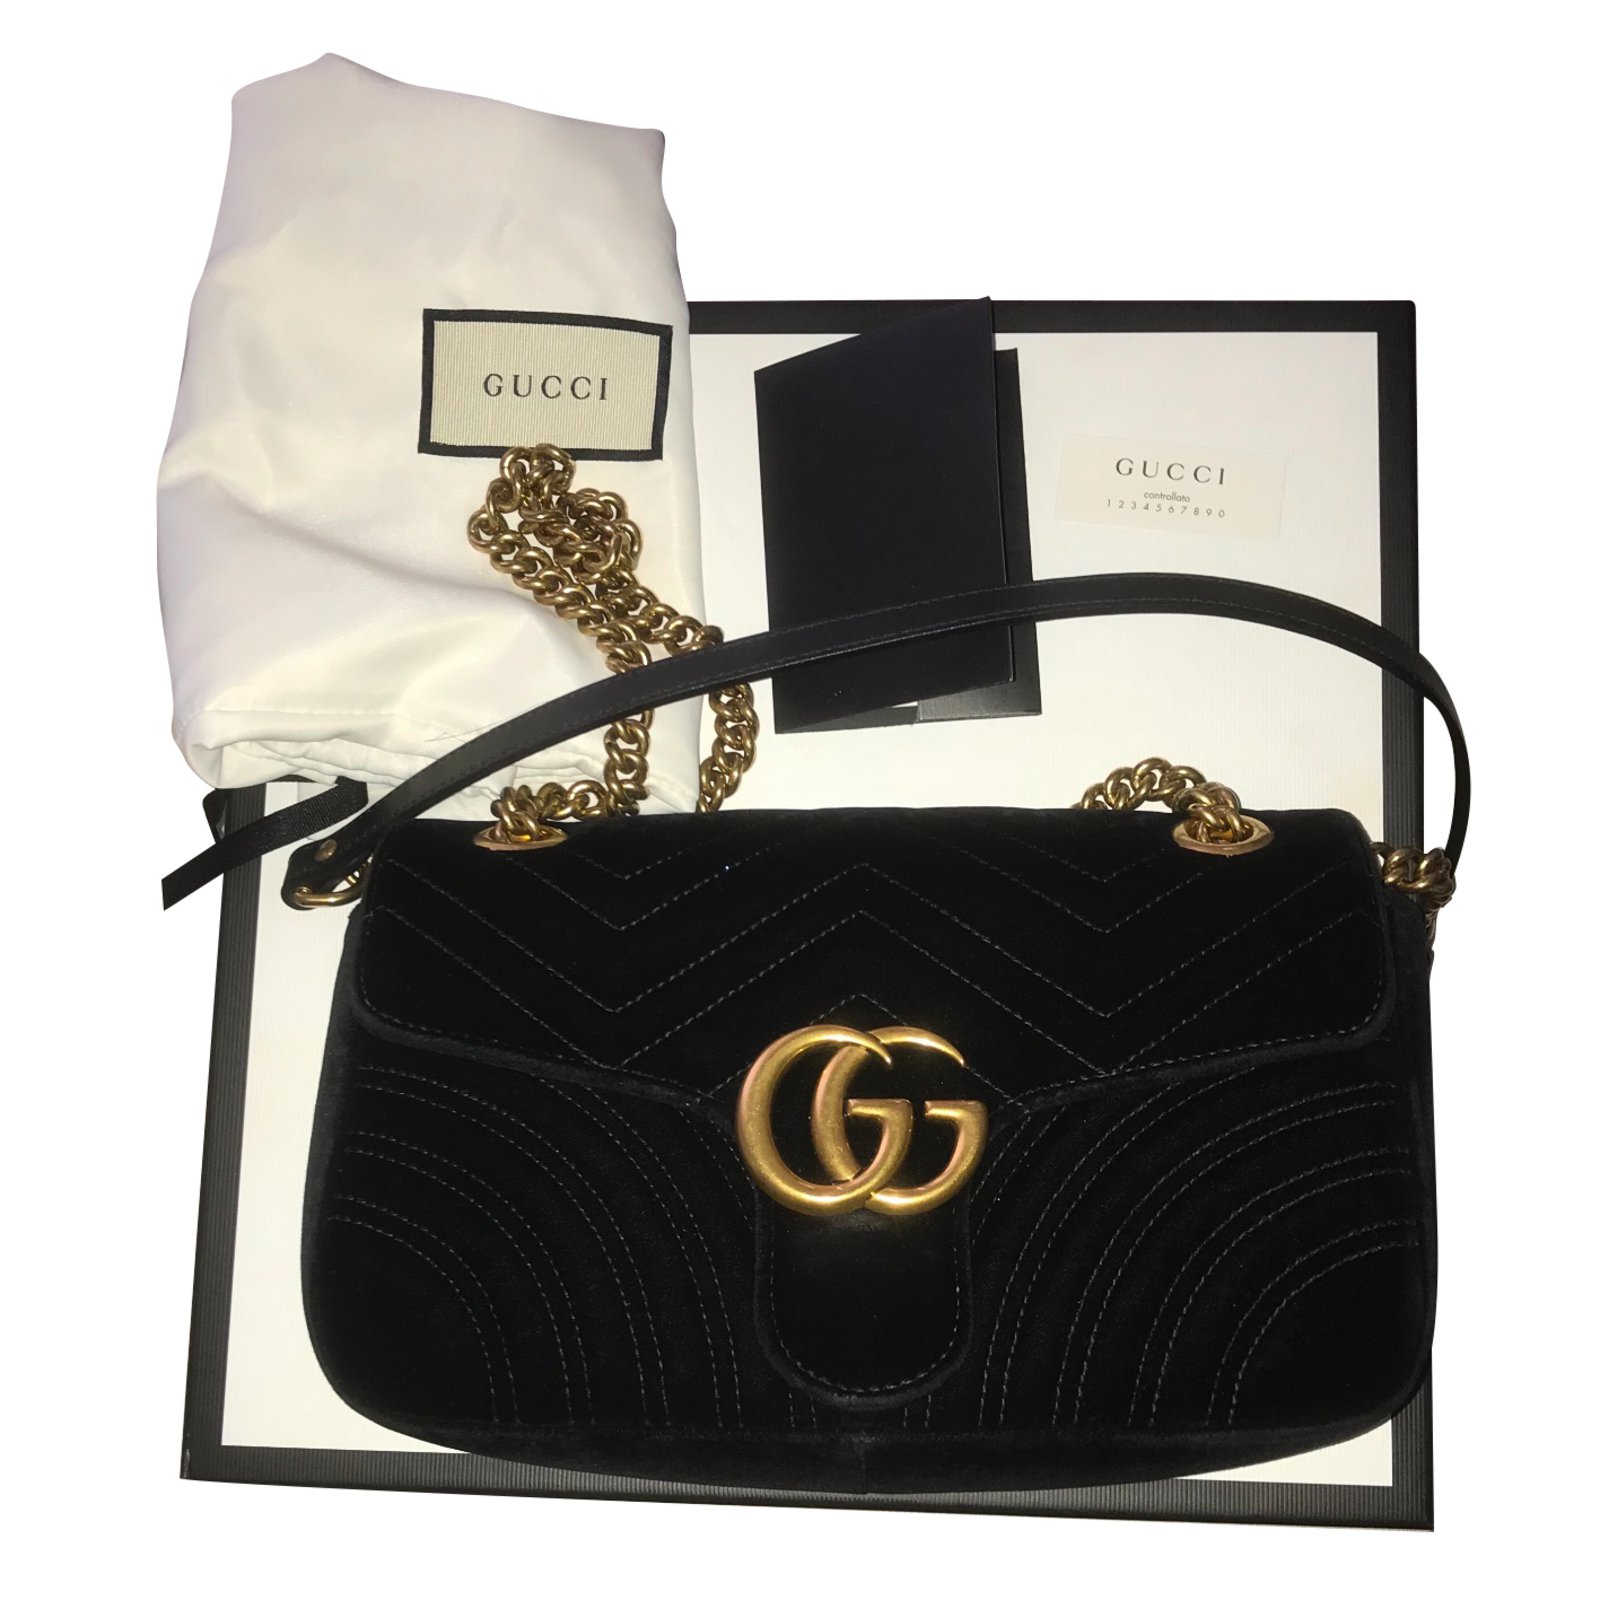 Gucci Marmont Handbags Velvet Black ref 